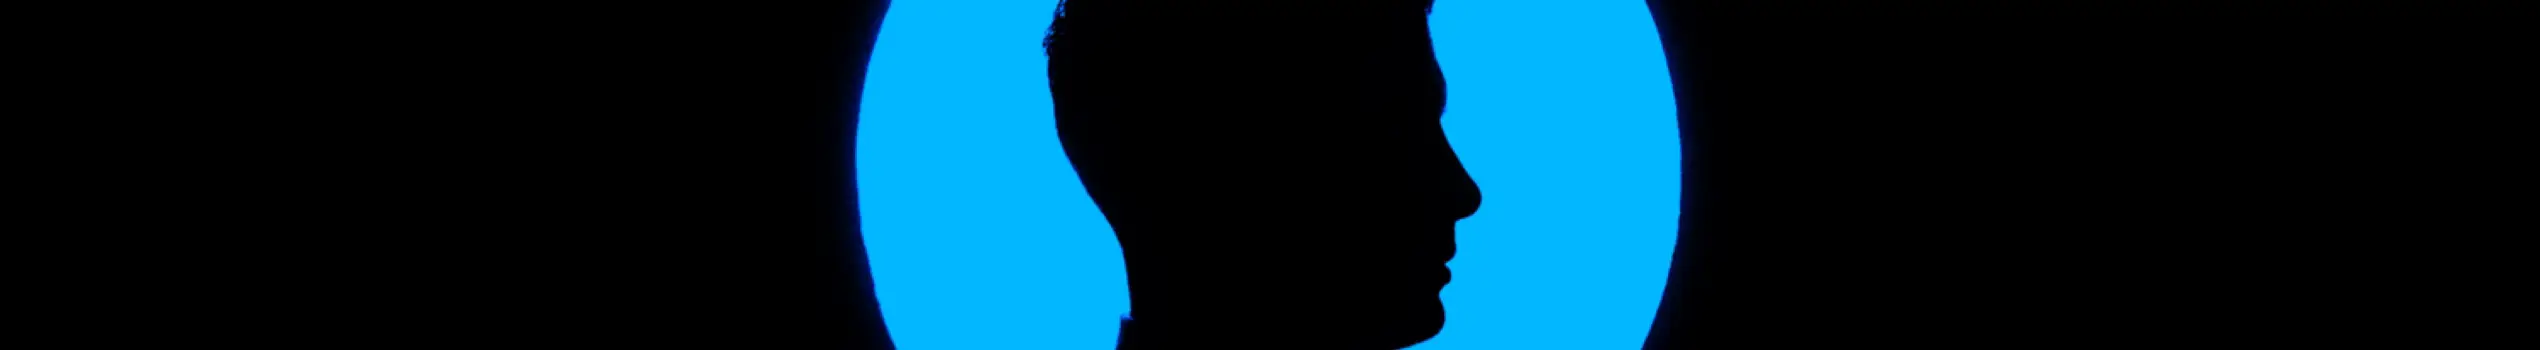 blue silhouette